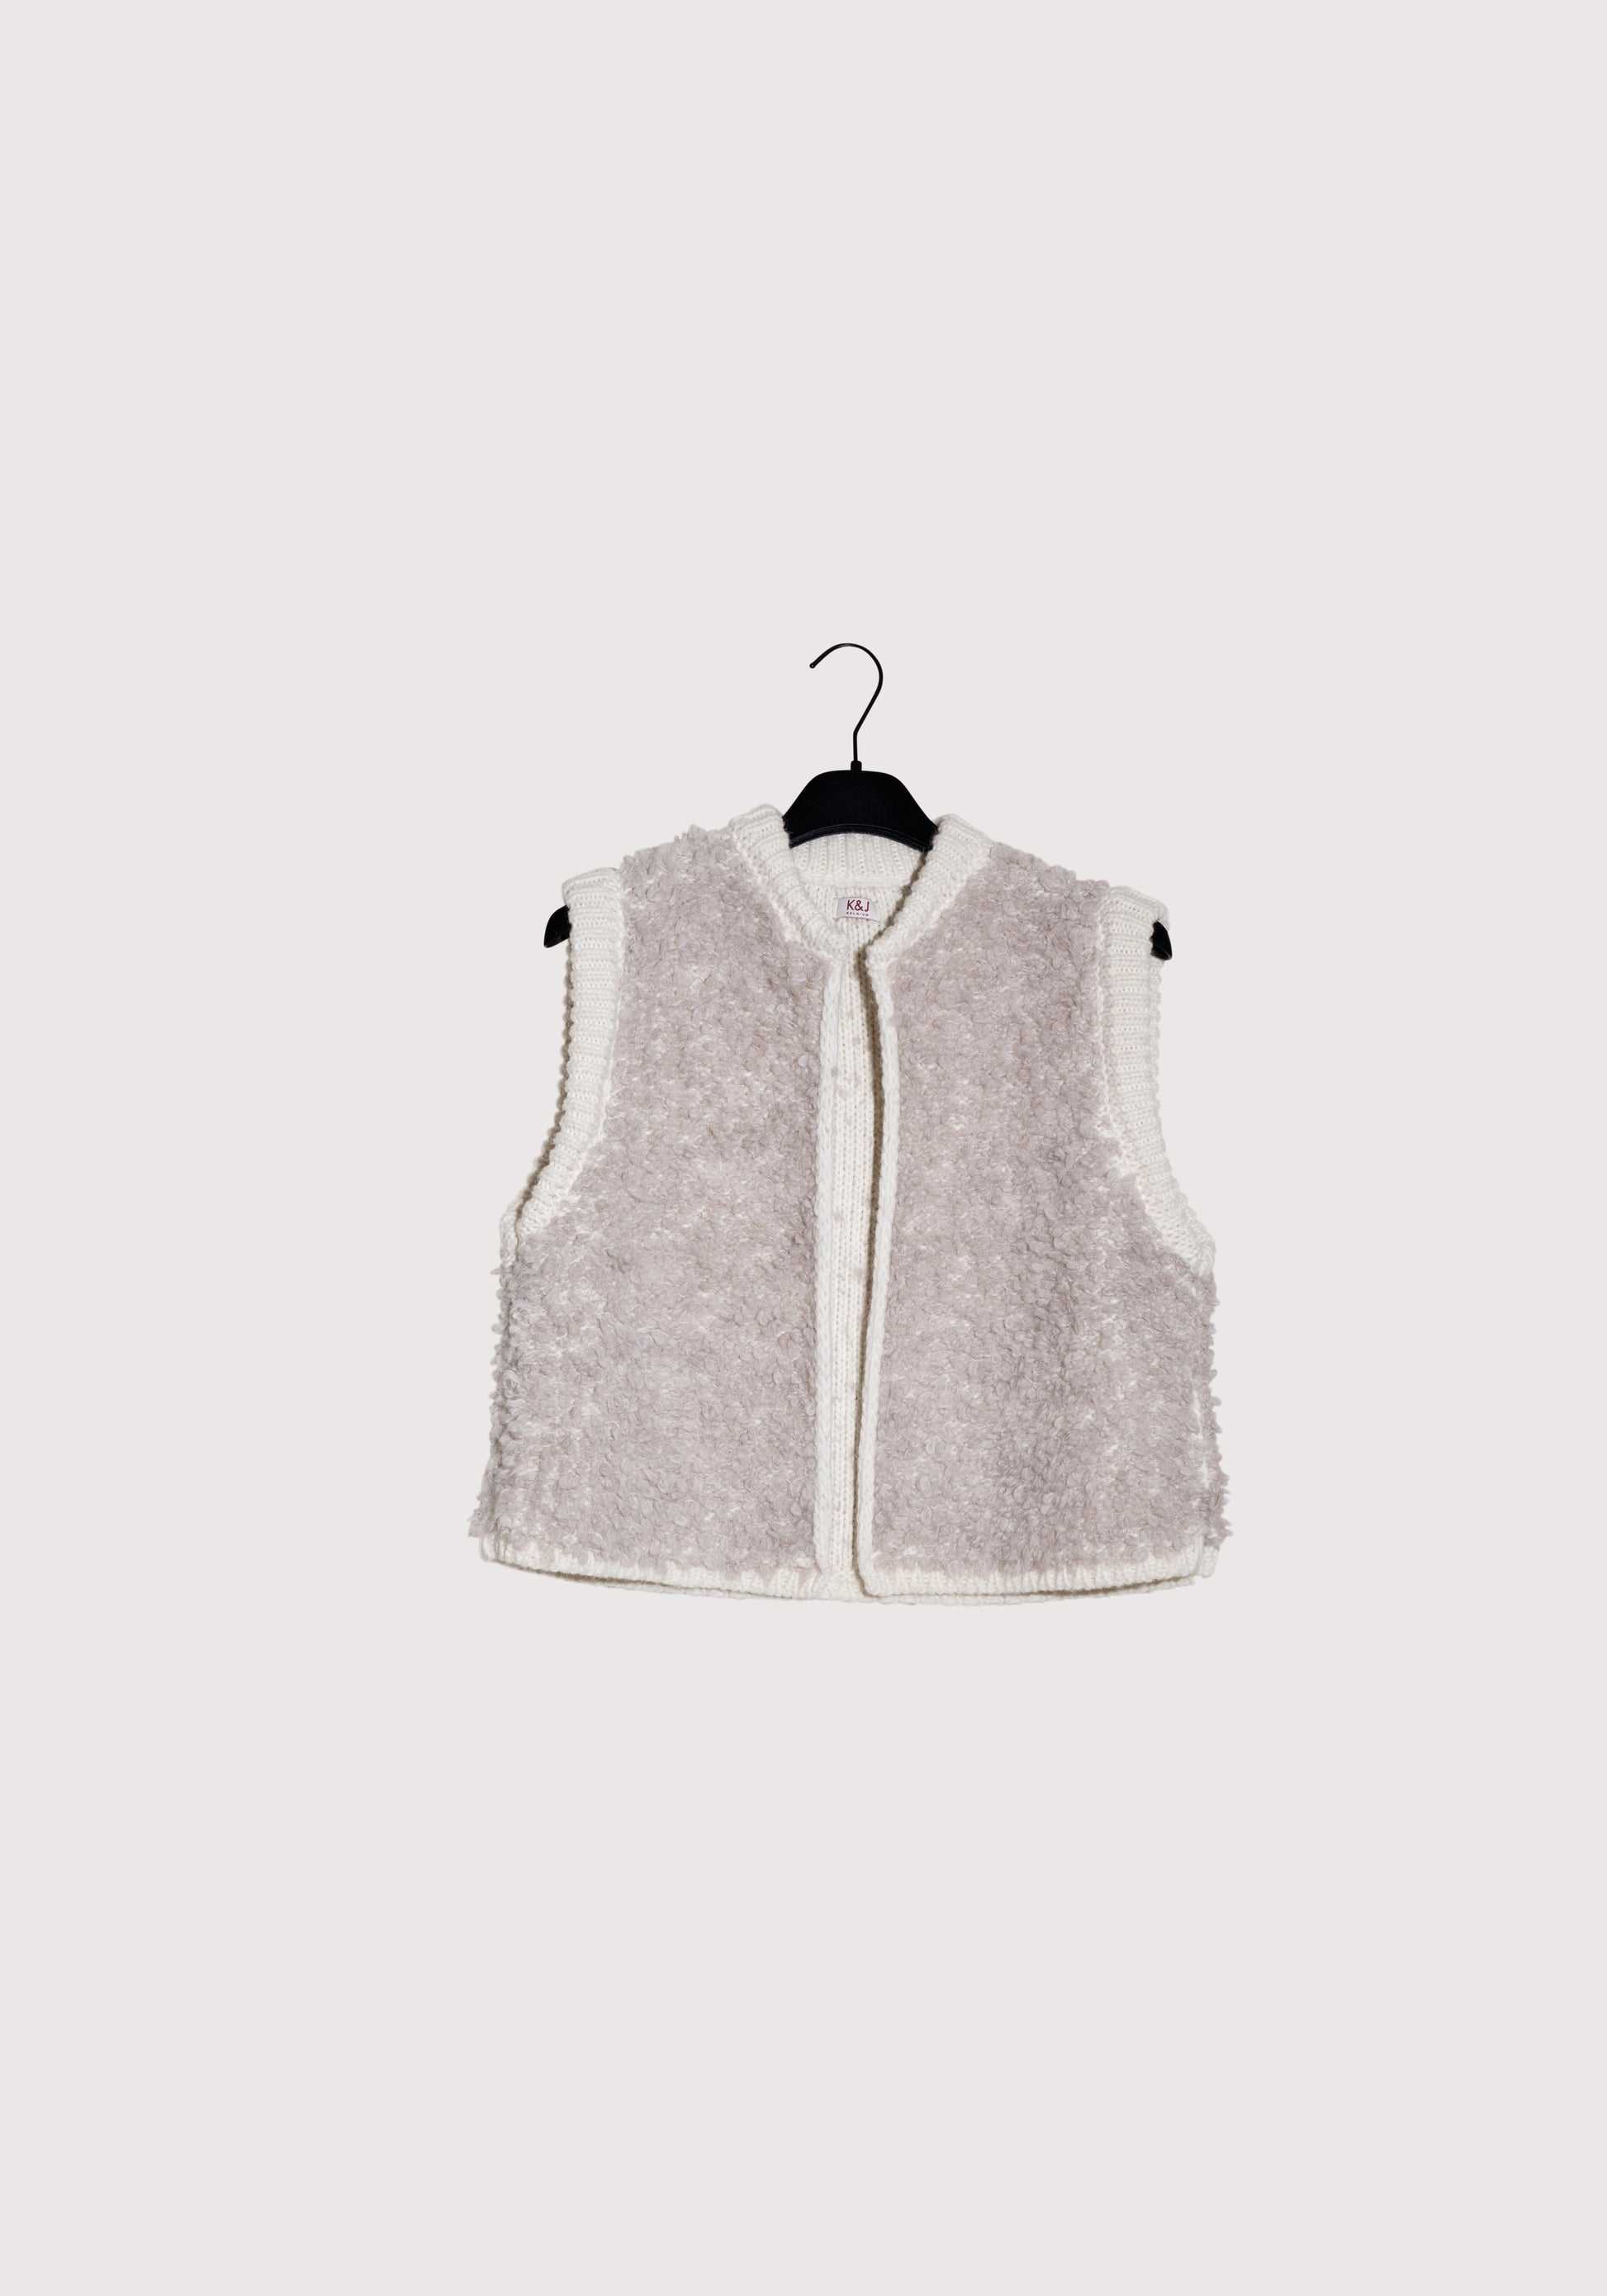 Wool beige short vest with soft details